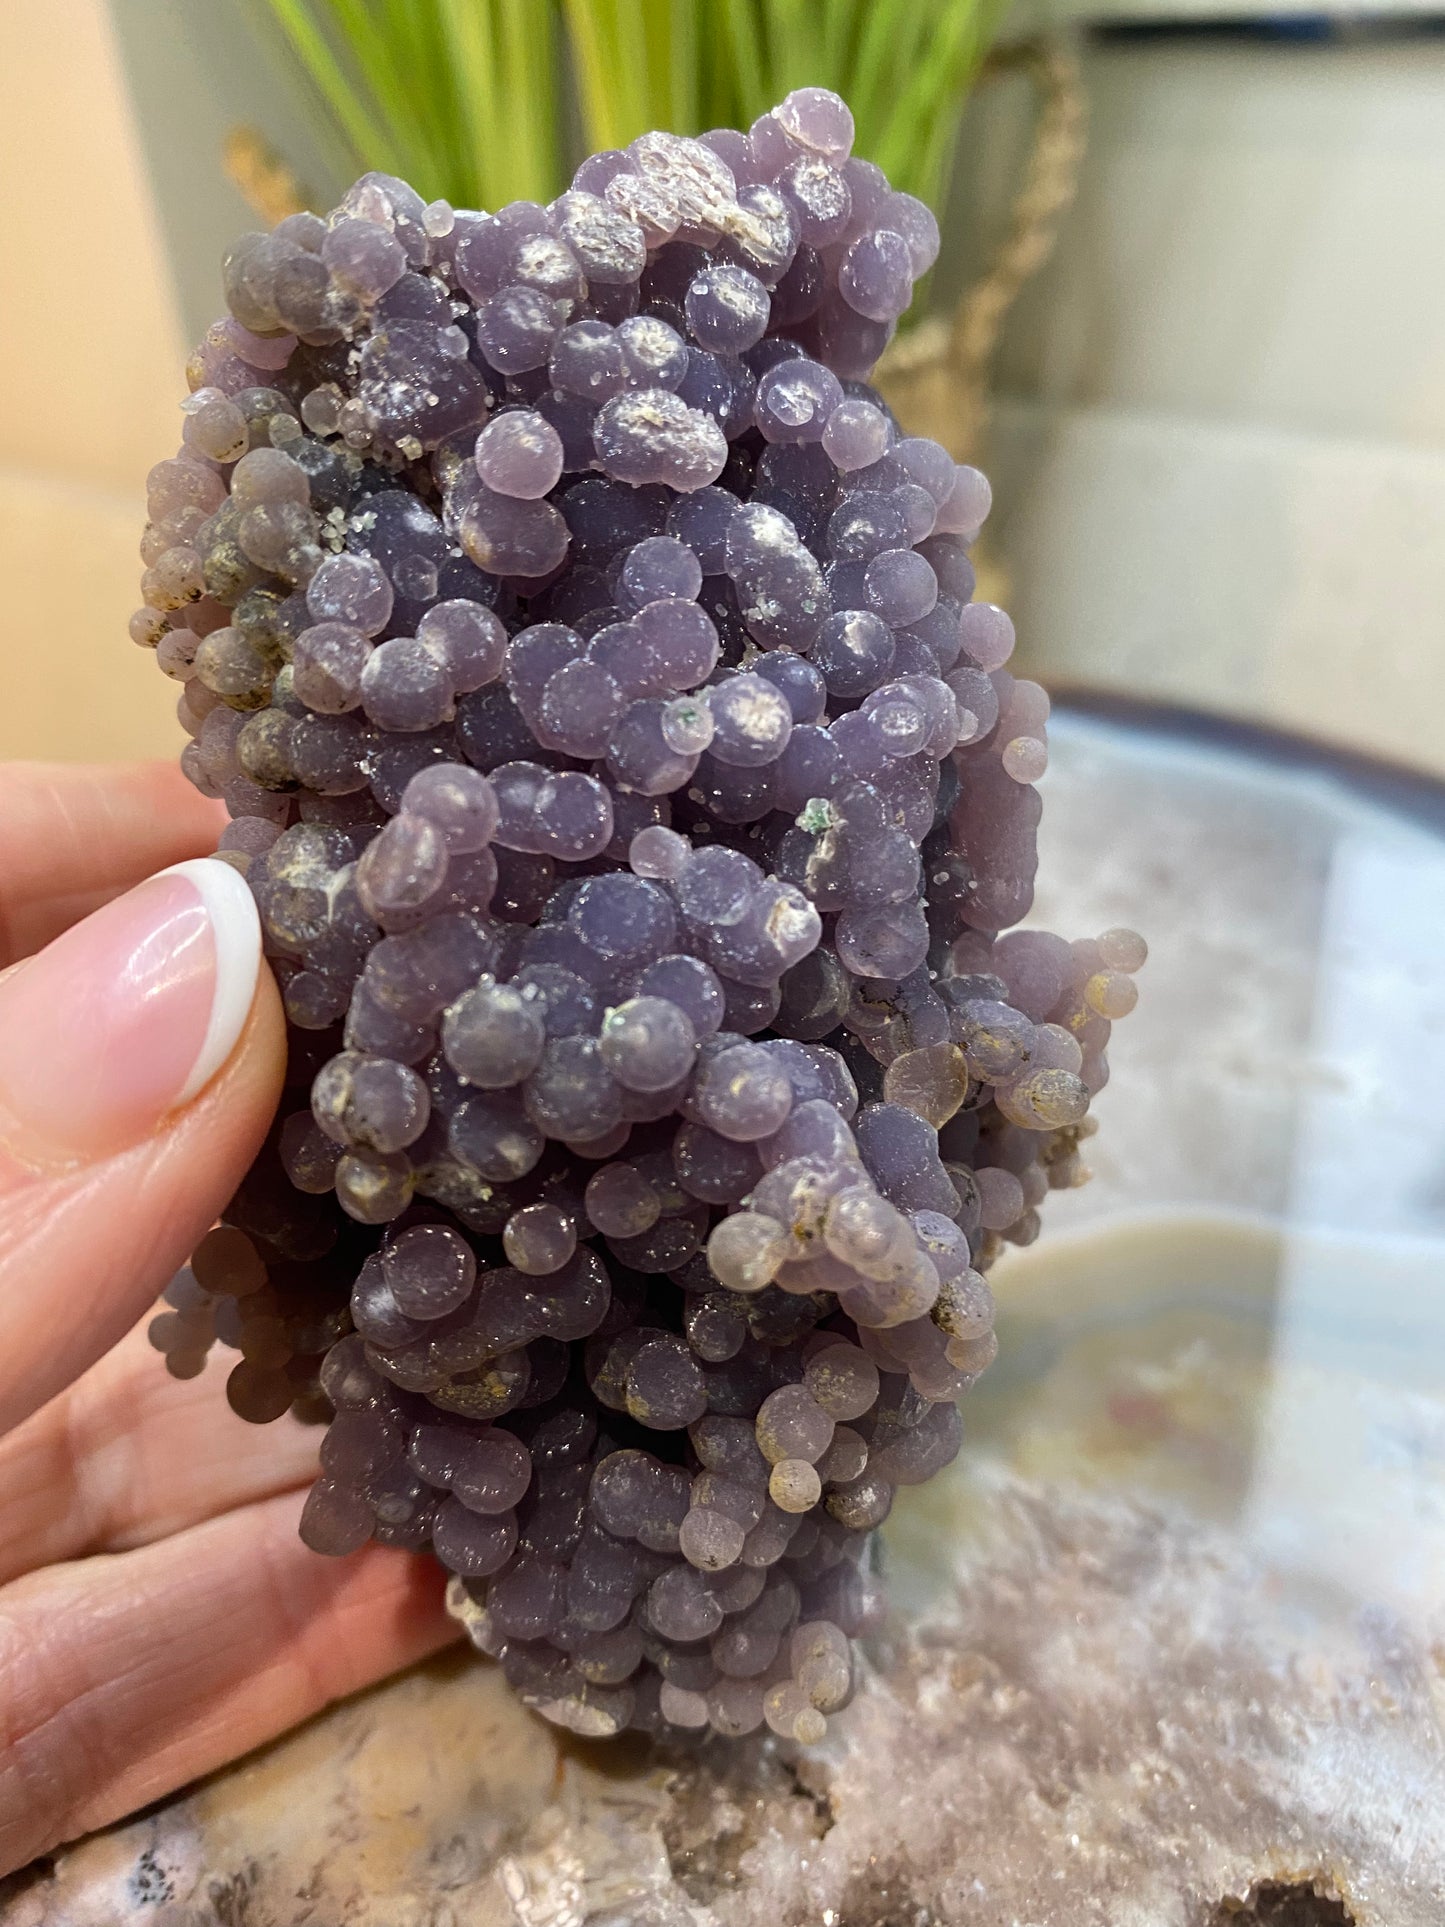 Grape agate specimen